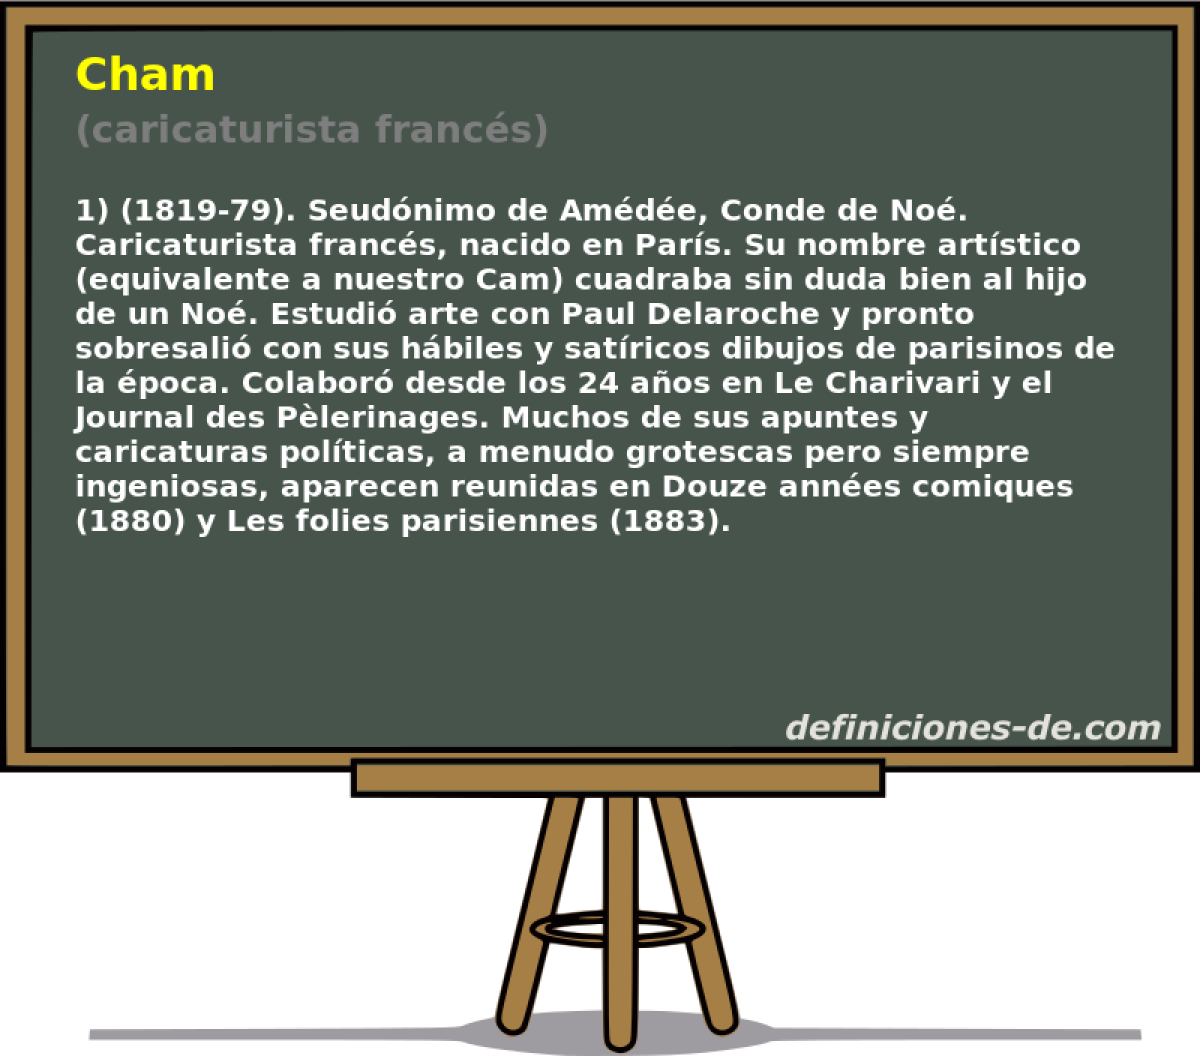 Cham (caricaturista francs)